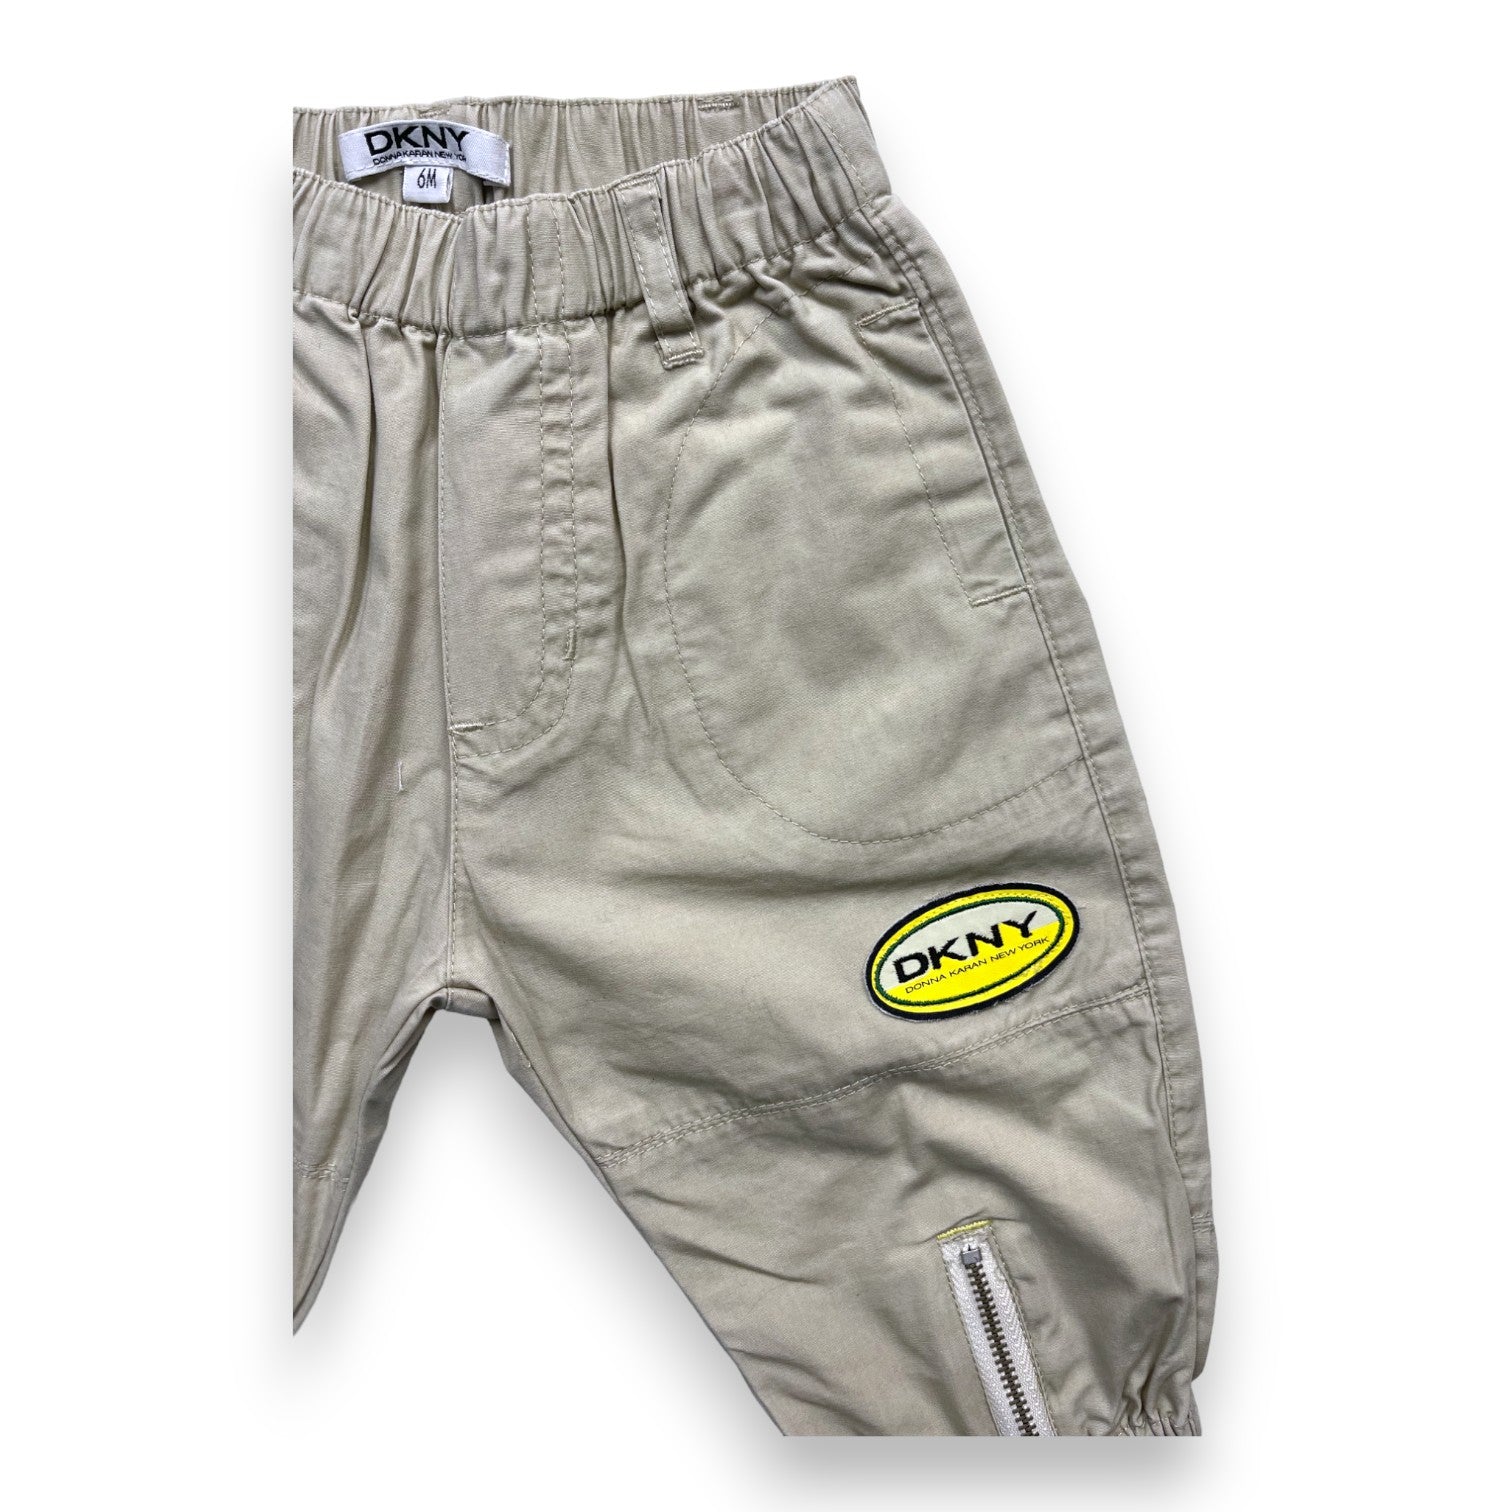 DKNY - Pantalon type cargo beige - 6 mois